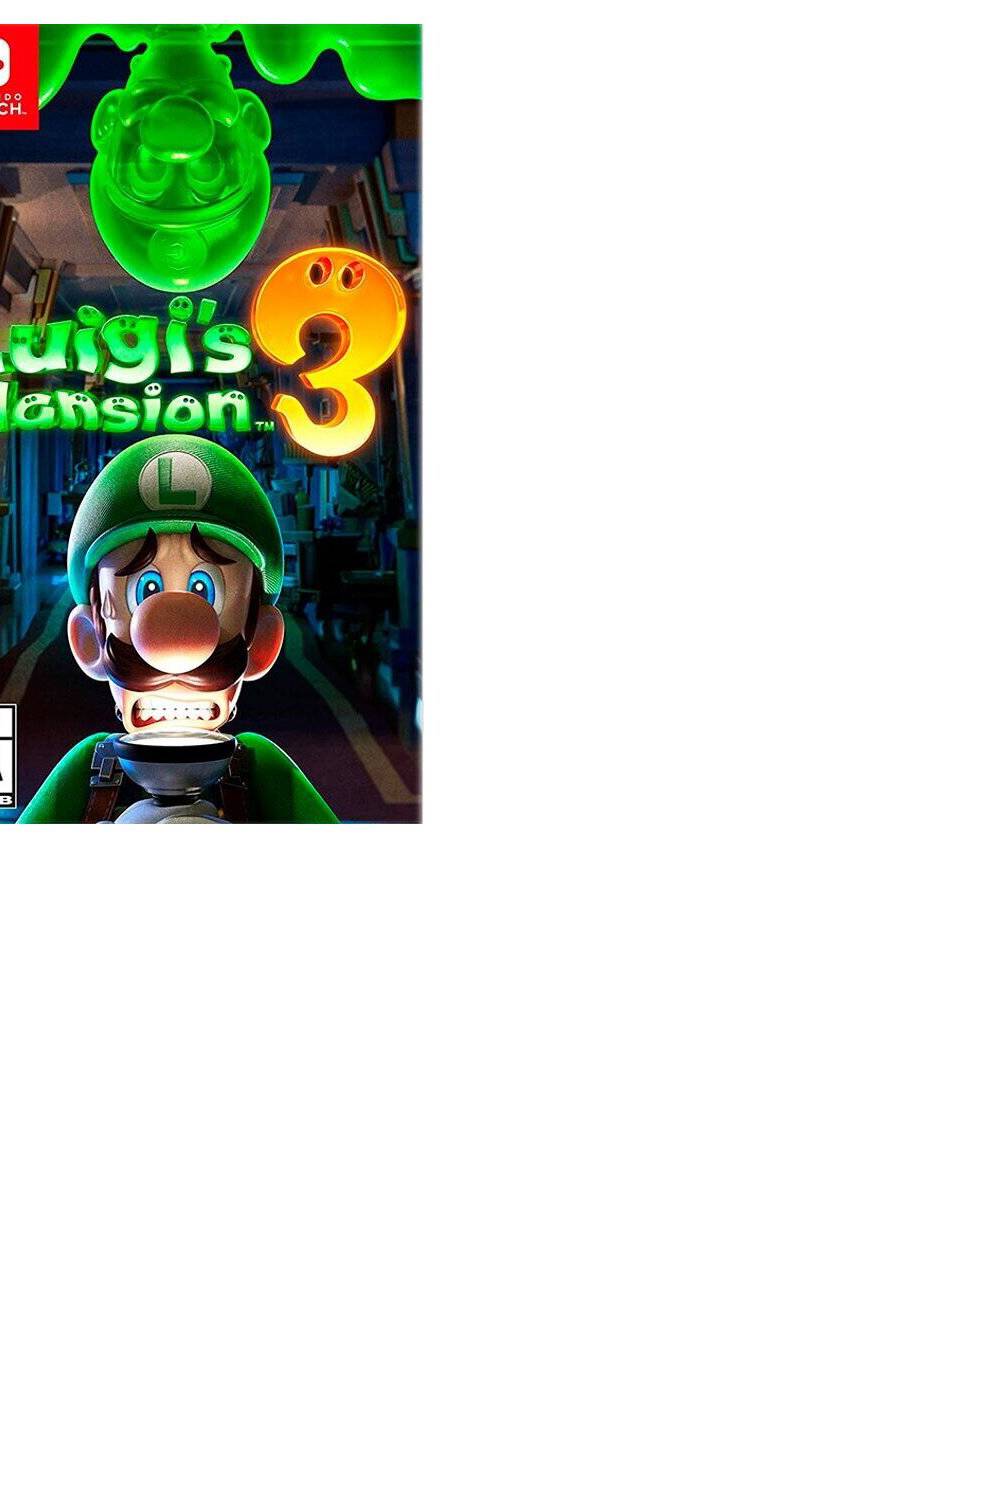 NINTENDO - Luigis Mansion 3 Switch